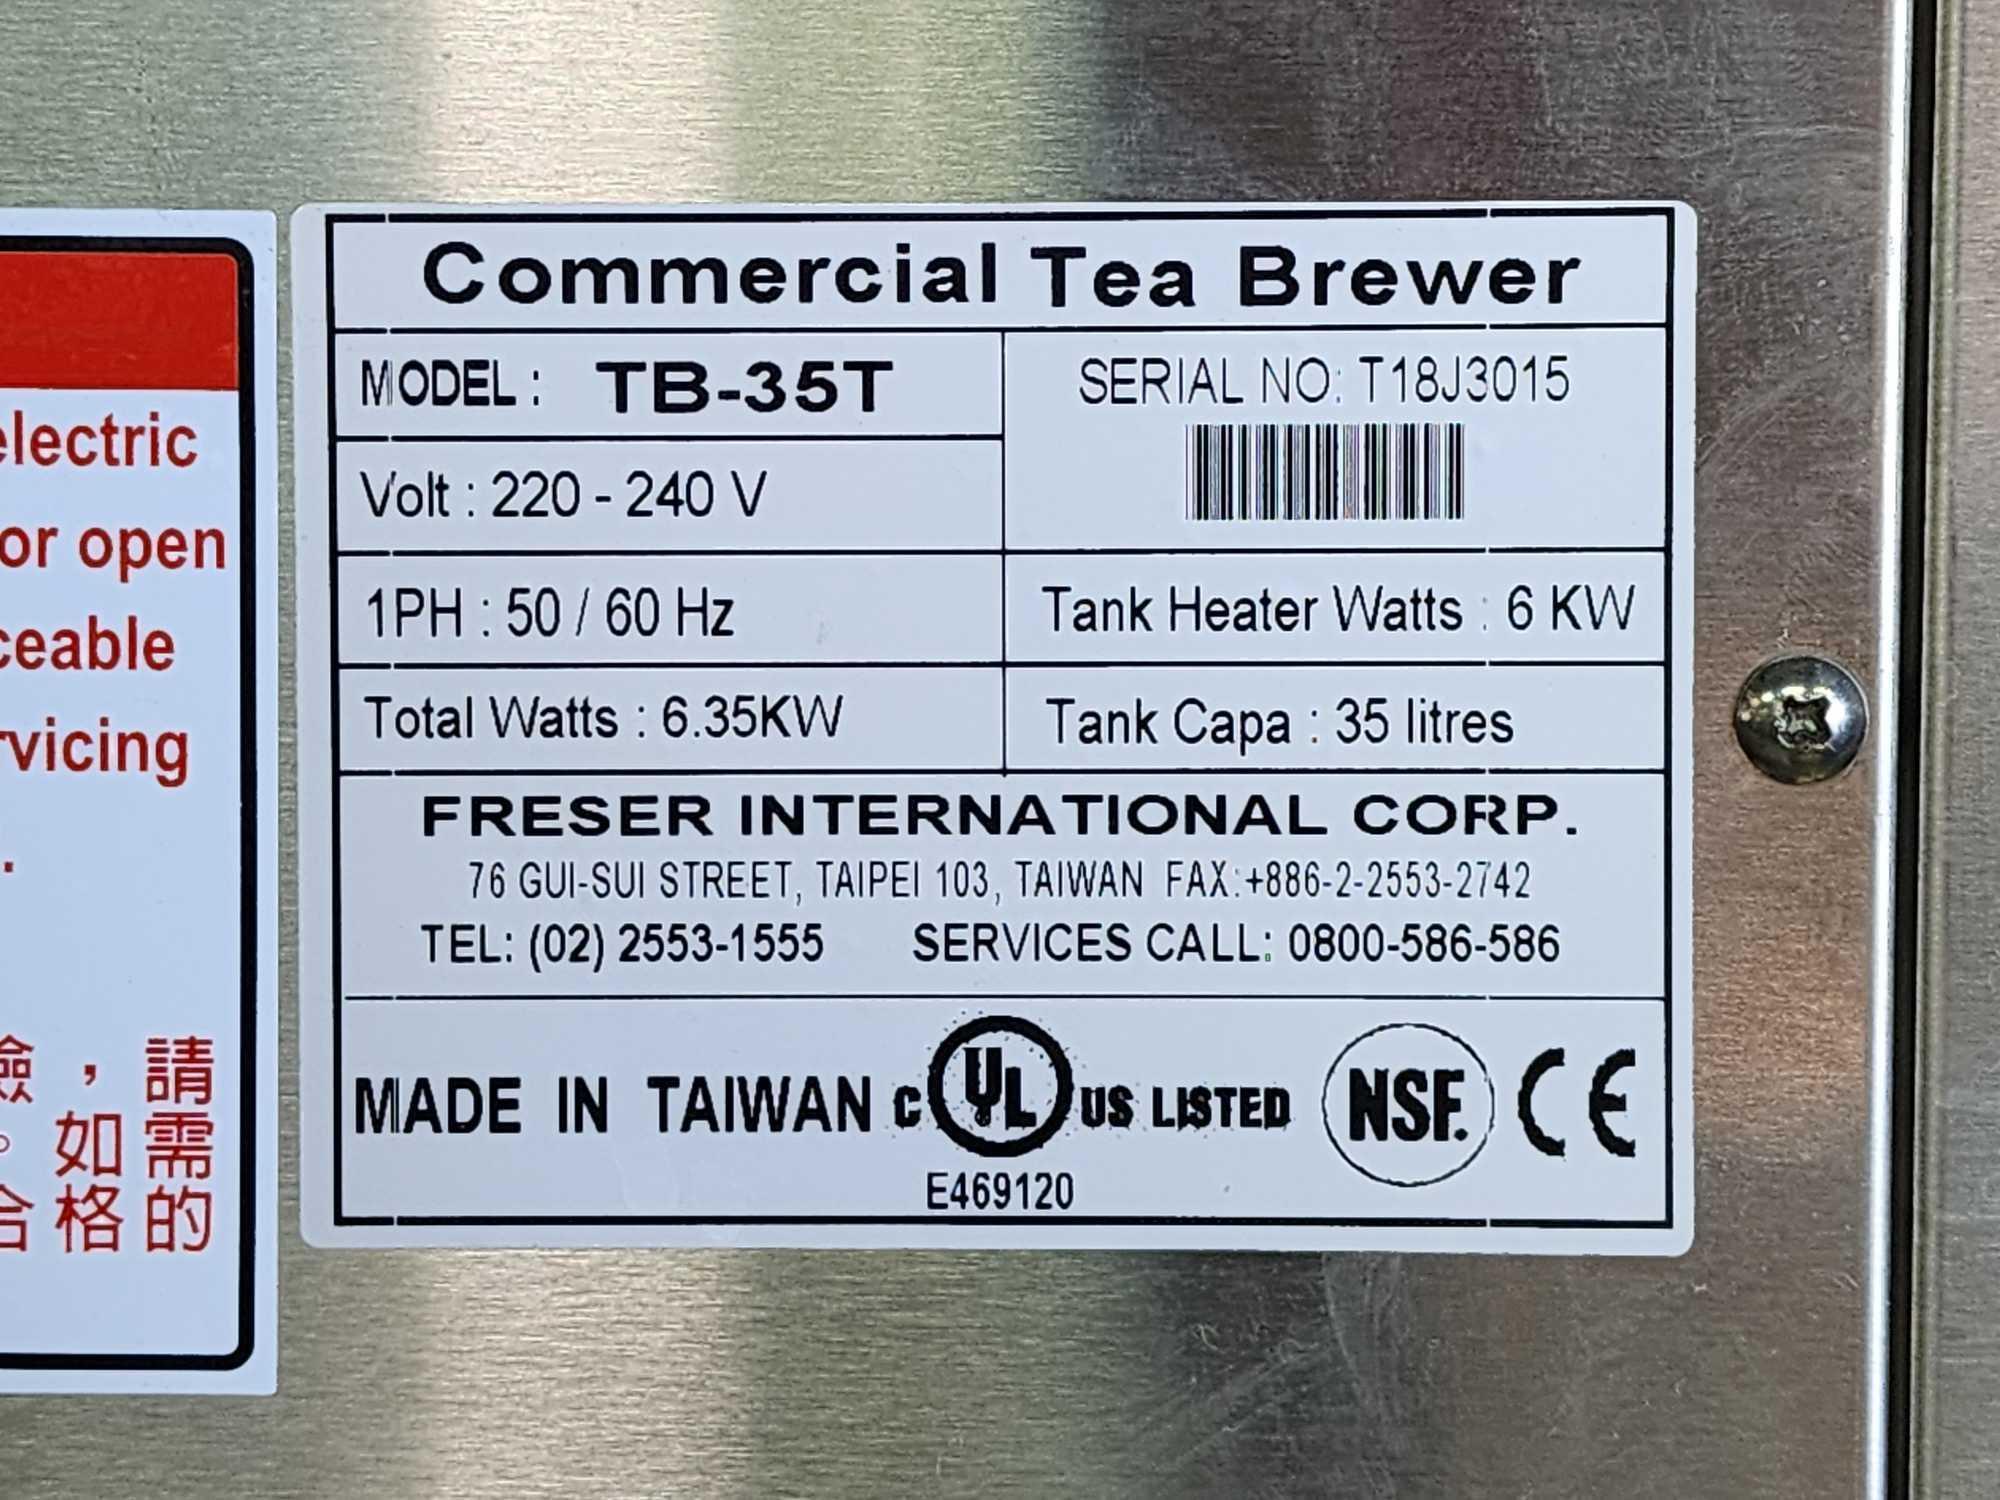 Freser Intelli Tea Programmable Tea Brewer